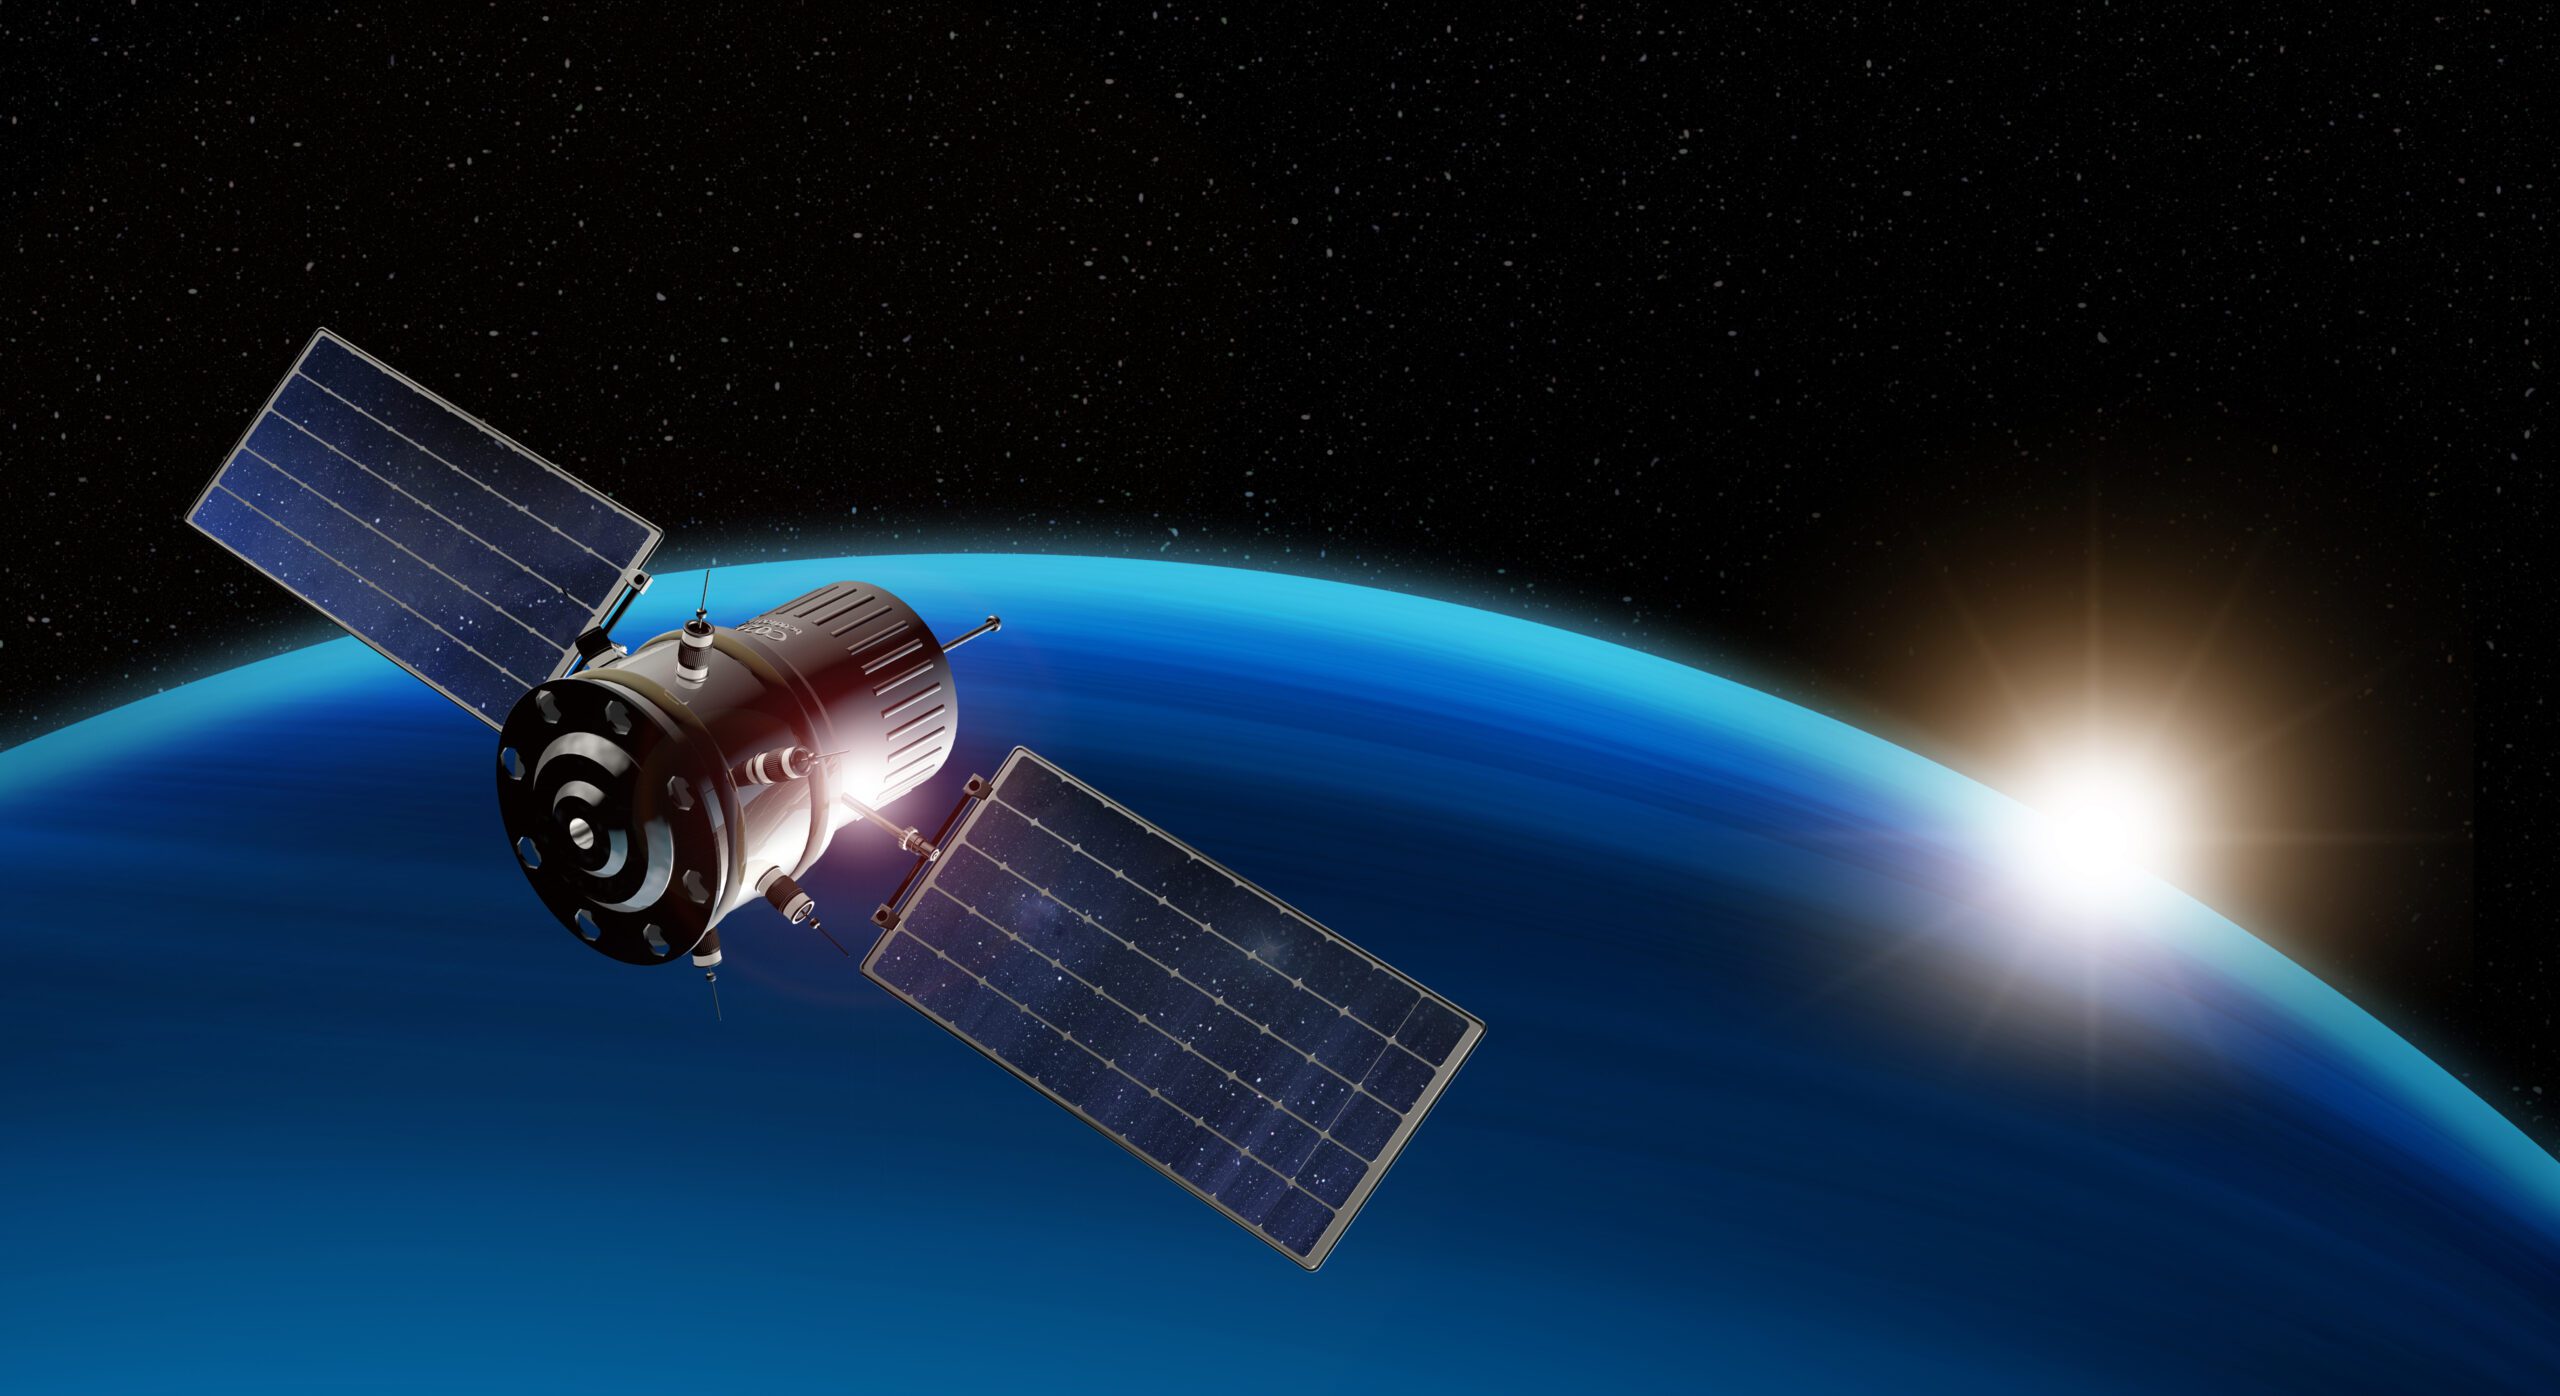 Global Satellite Navigation System scaled - 3d illustration of satellite orbiting the earth